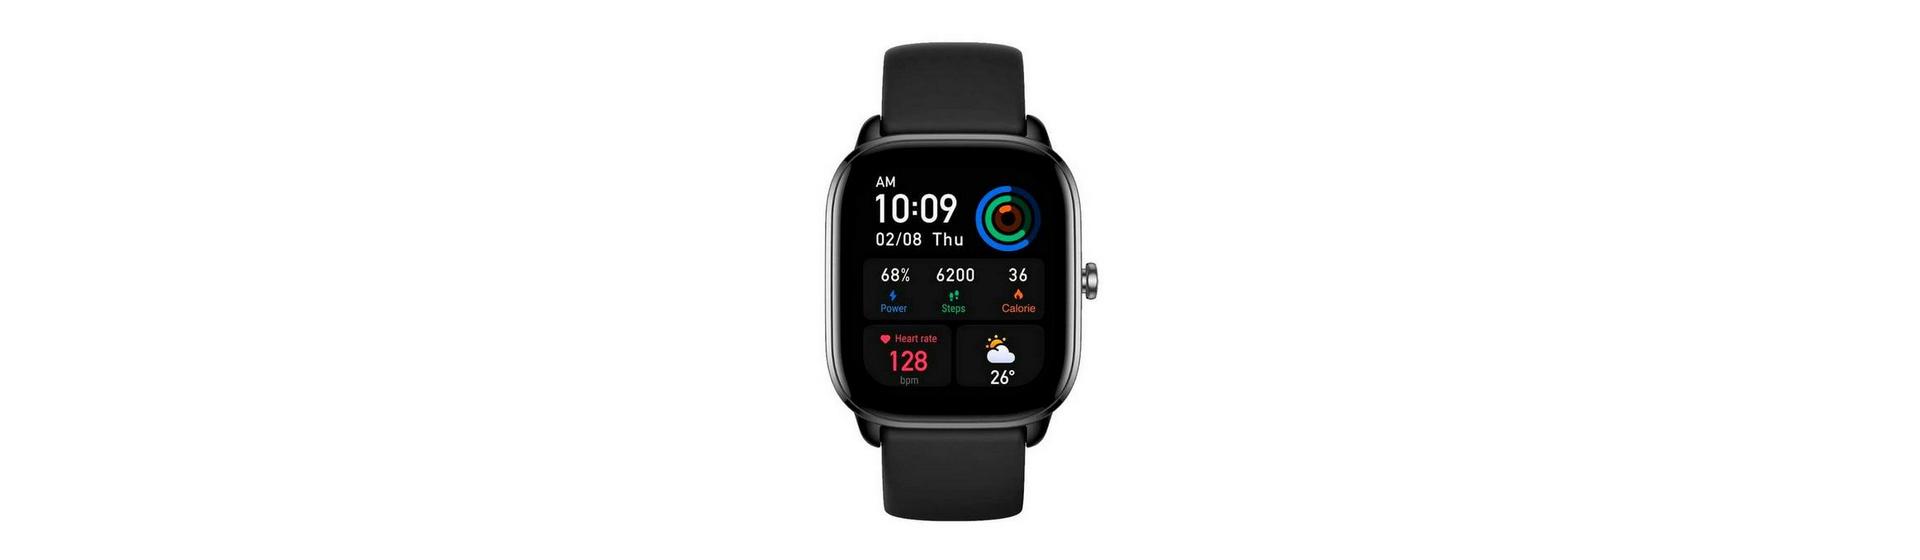 Promoção: Smartwatch Amazfit GTS 4 Mini por apenas R$509,00* na Amazon